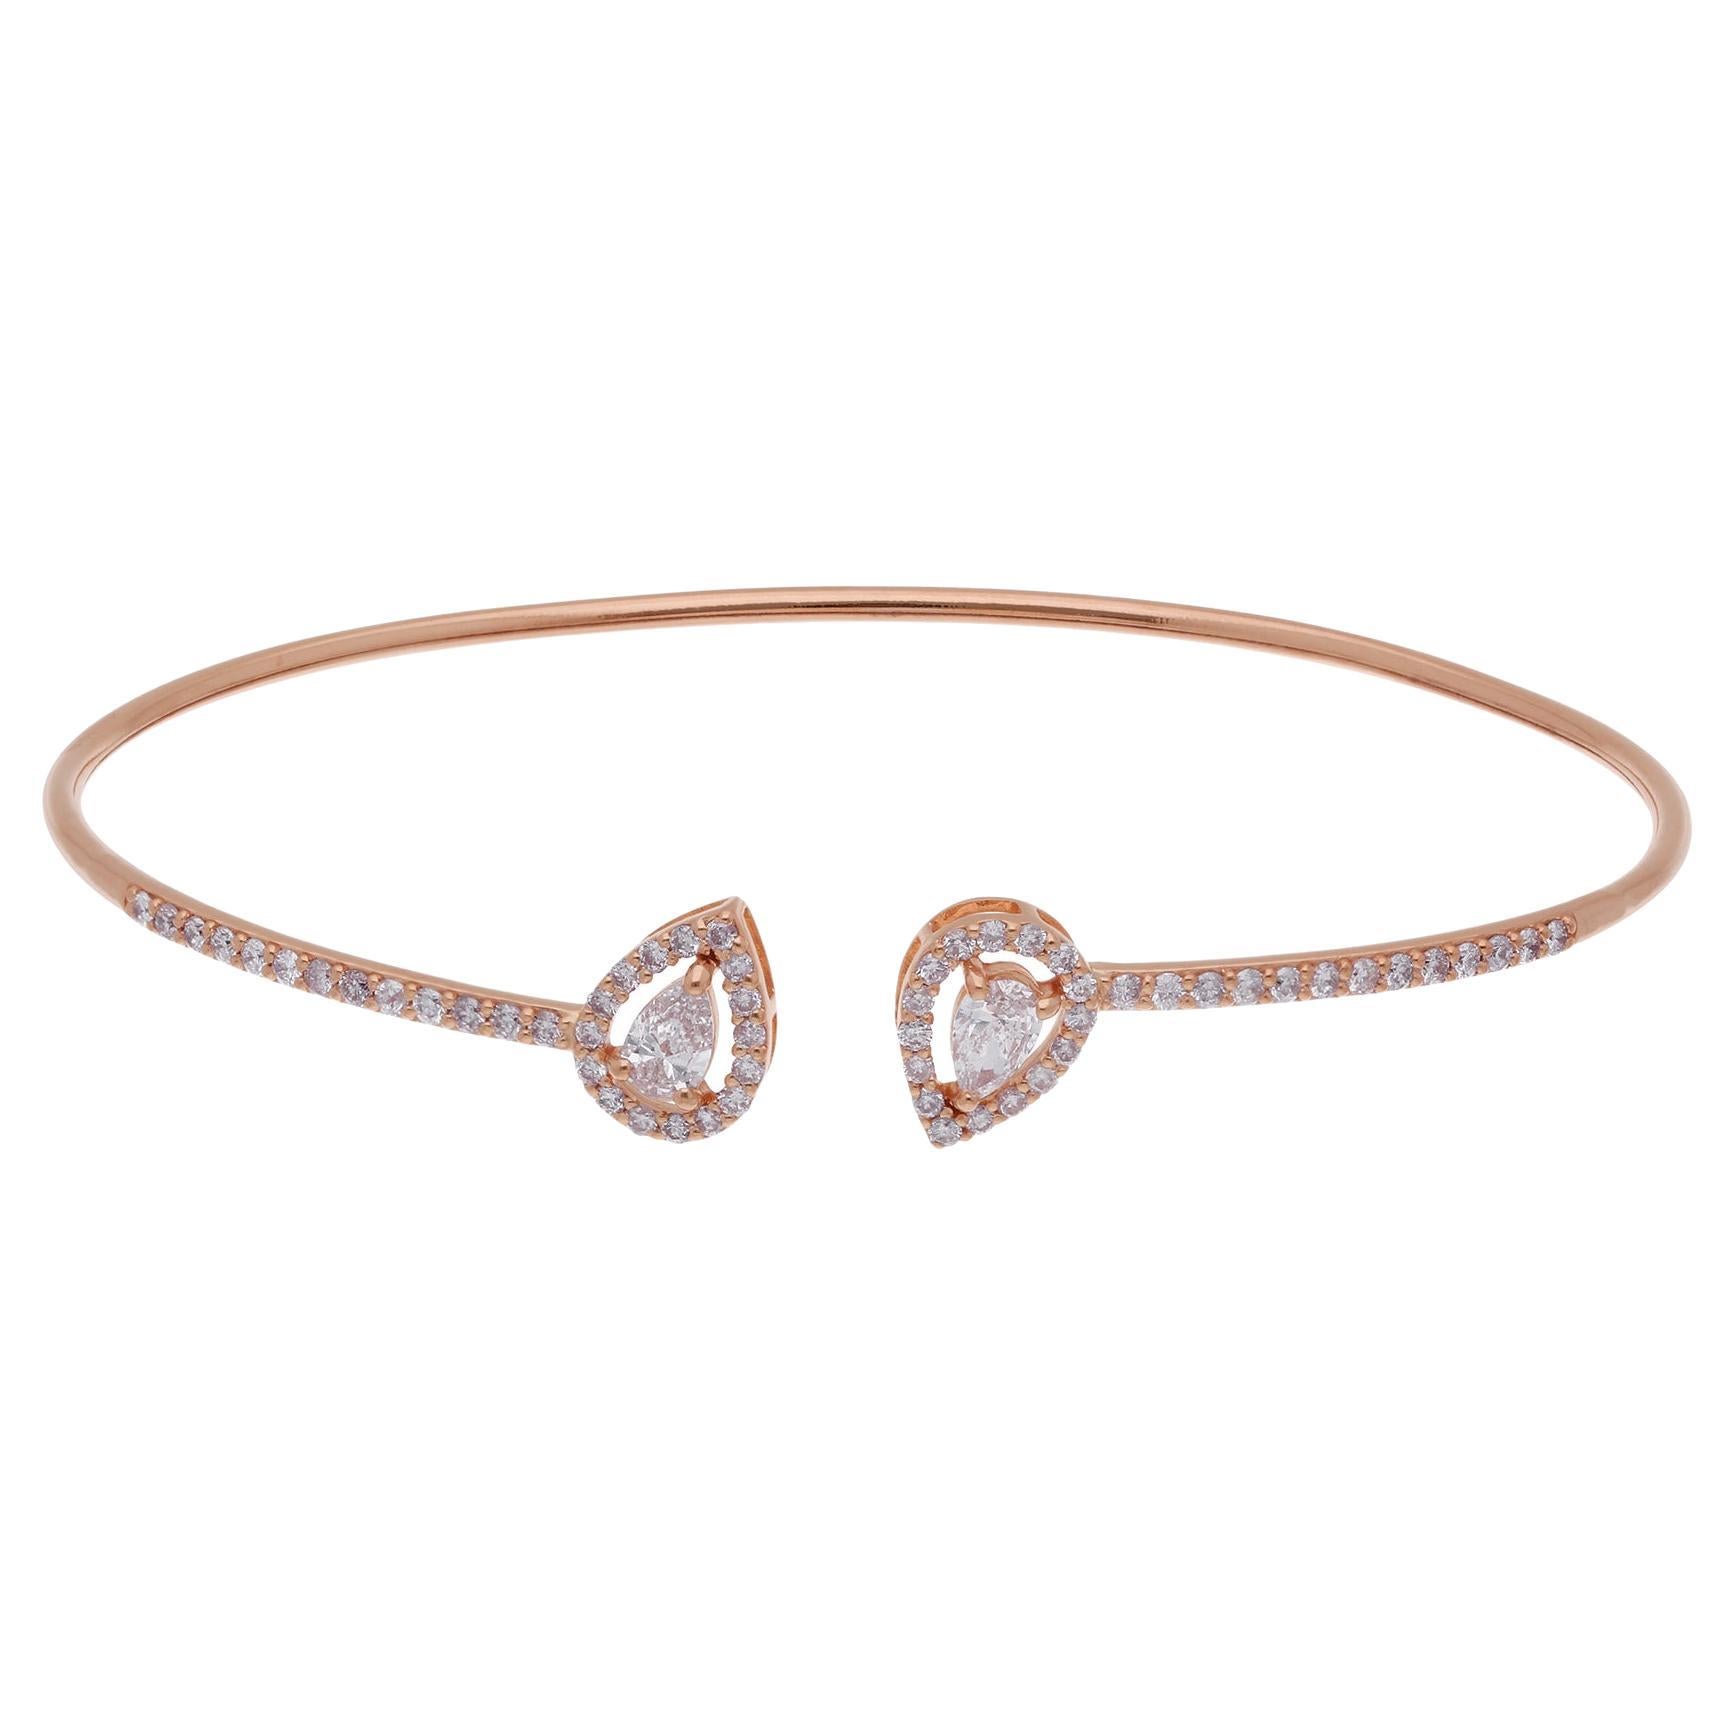 SI Clarity HI Color Pear Round Diamond Cuff Bangle Bracelet 18 Karat Rose Gold